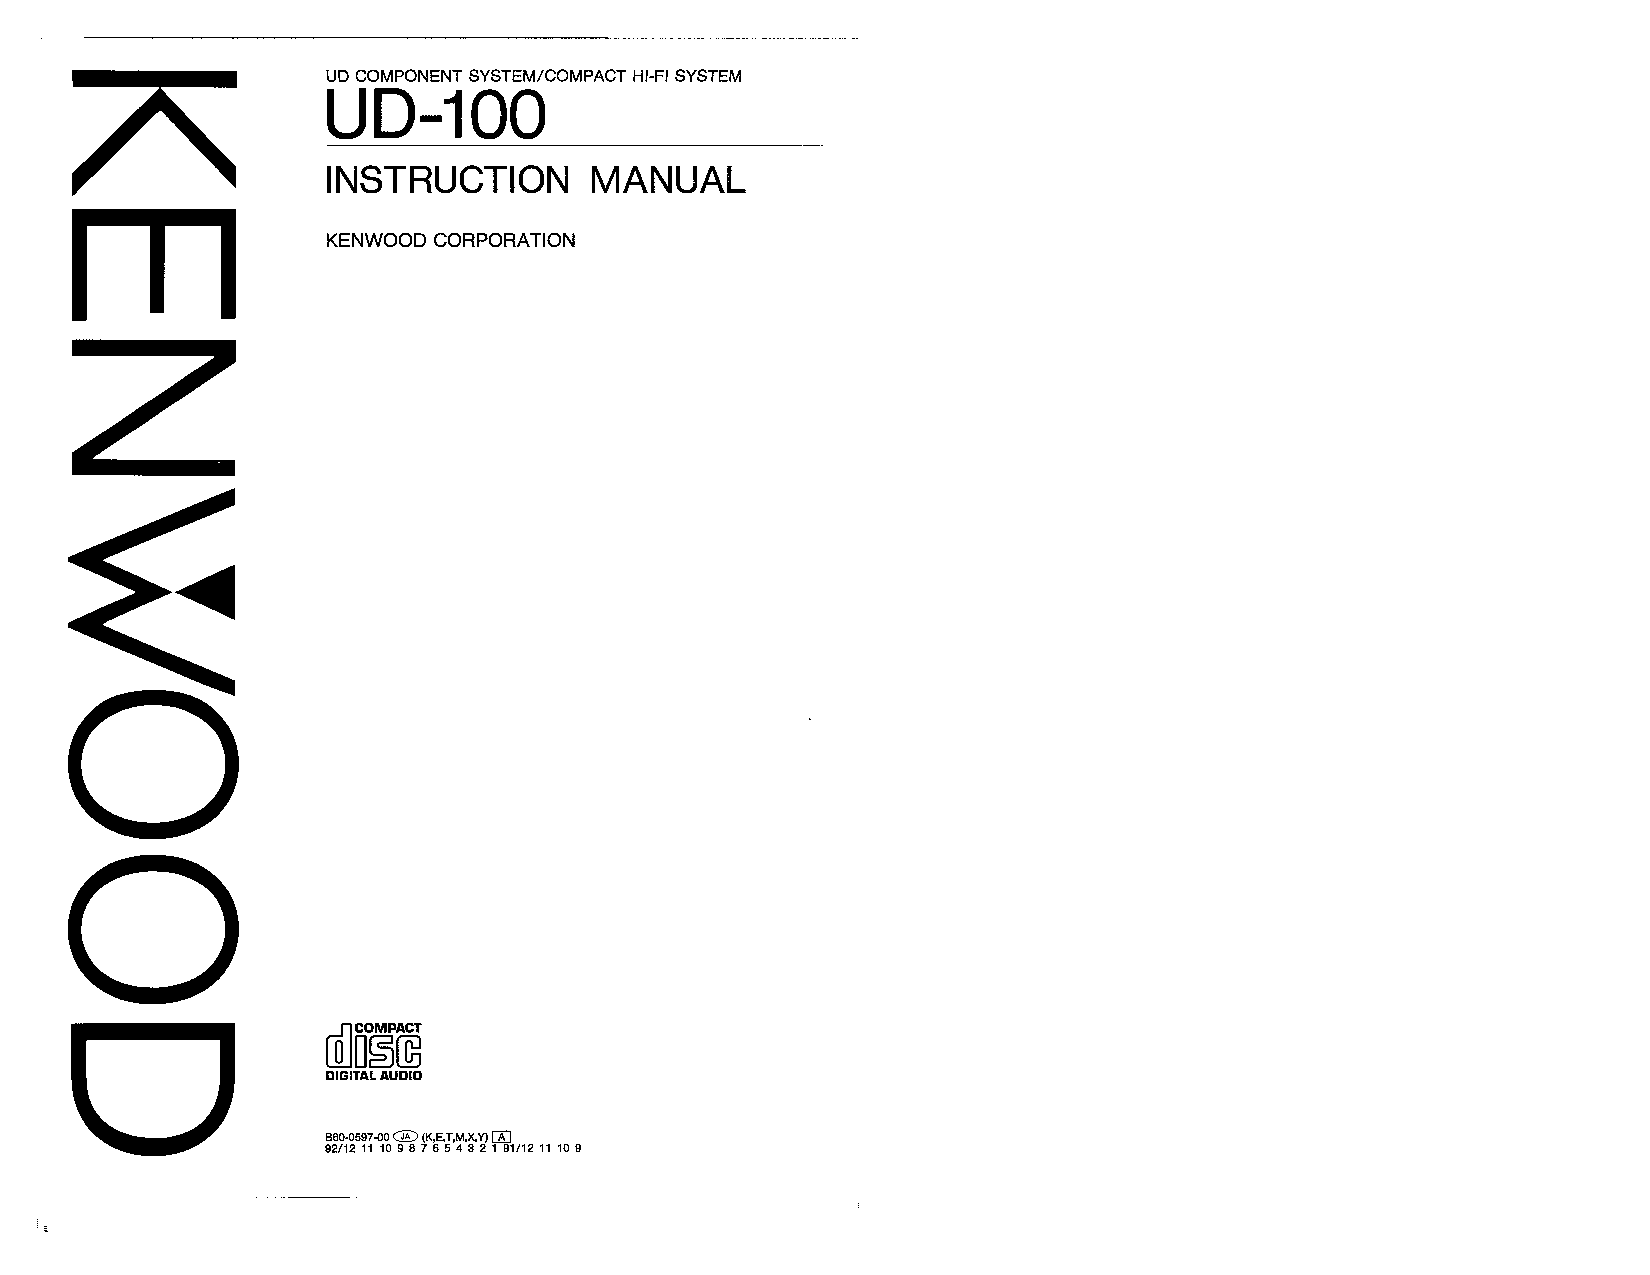 Kenwood UD-100 User Manual